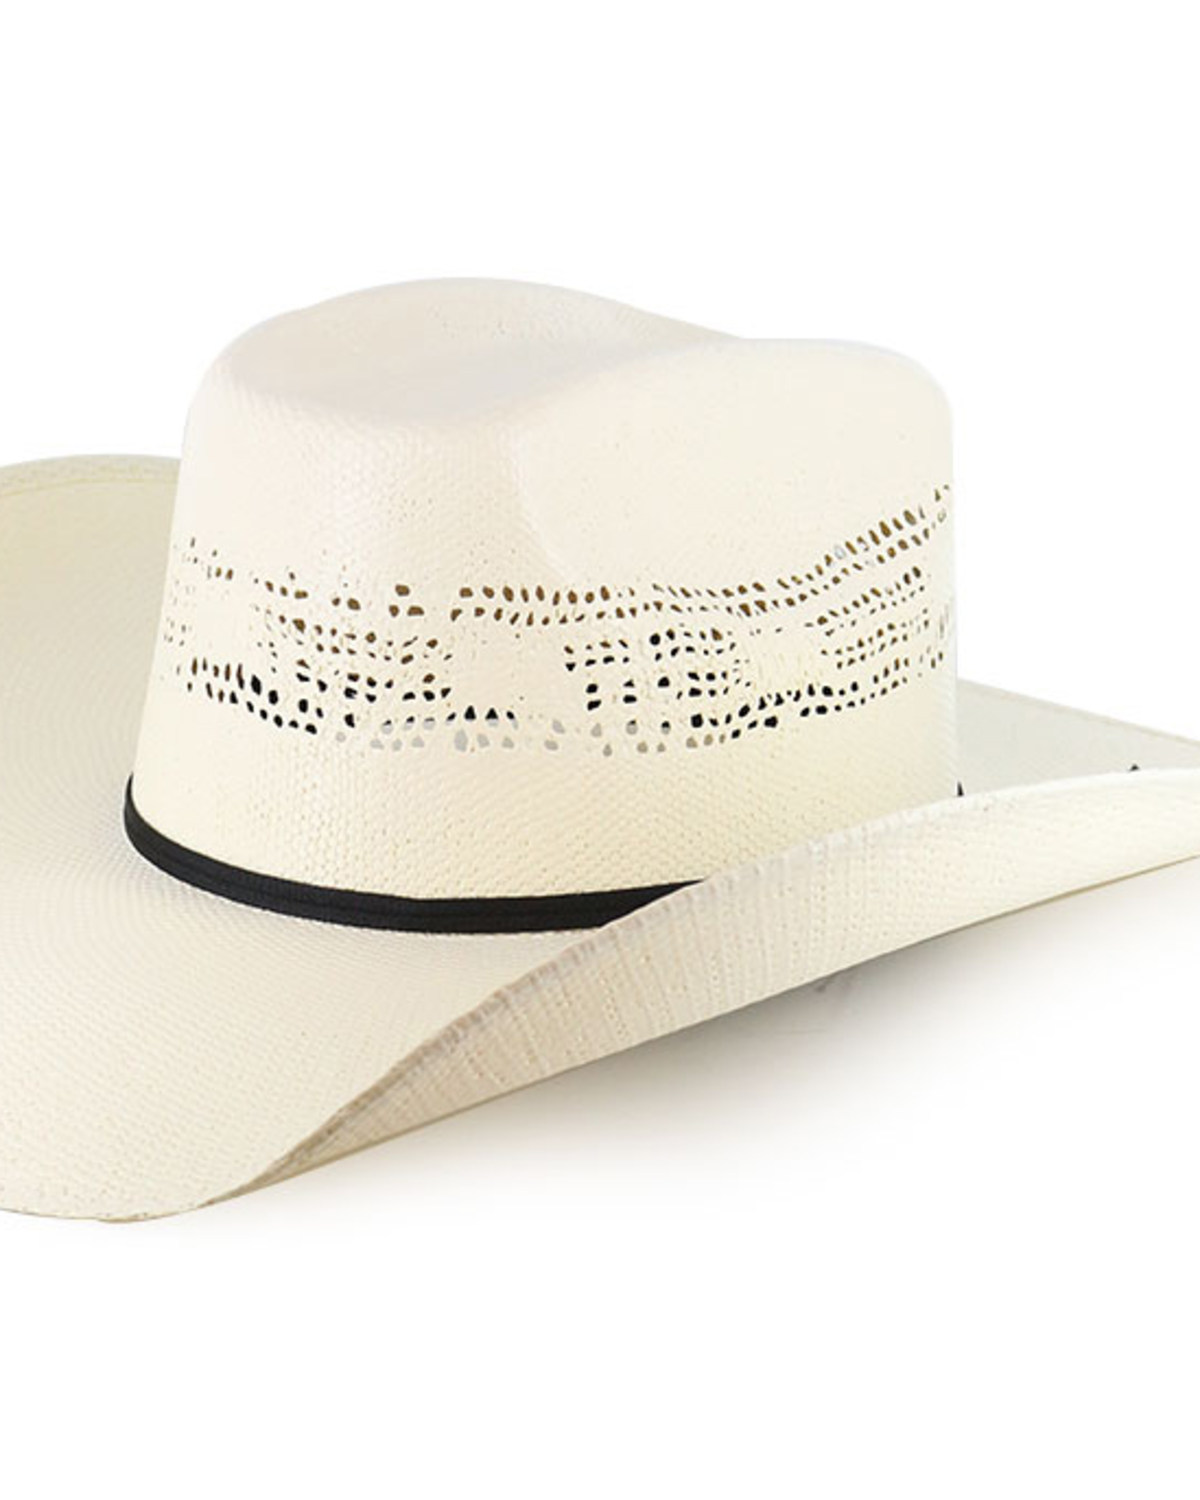 Cody James® Boys' Straw Western Hat